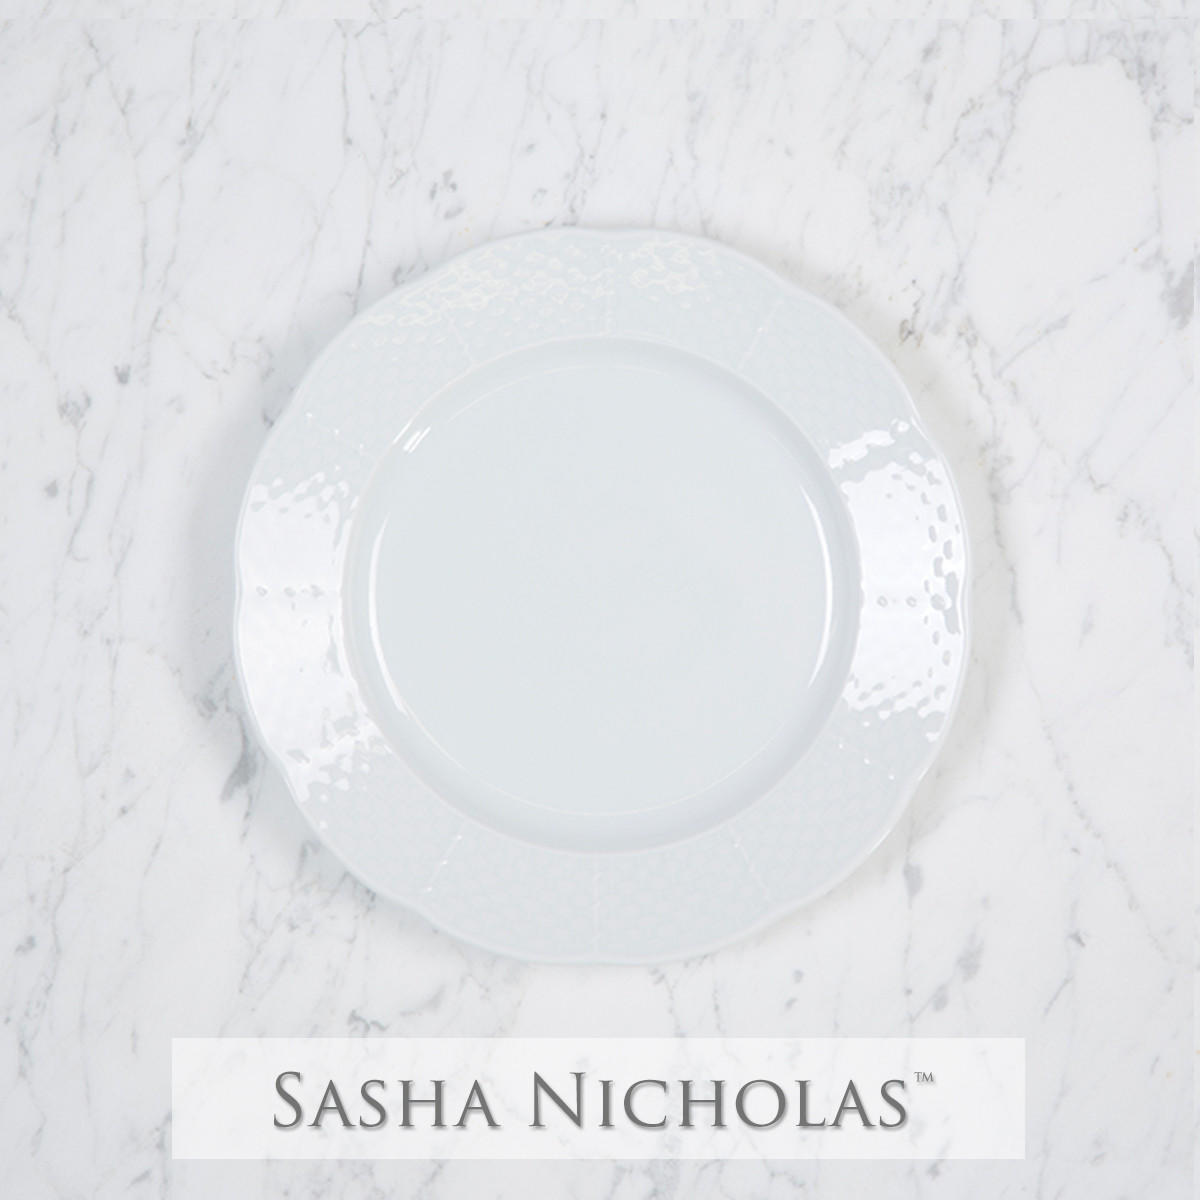 Furfine-orta Weave Salad Plate, Furfine-Orta SKU-3238F731, Sasha Nicholas